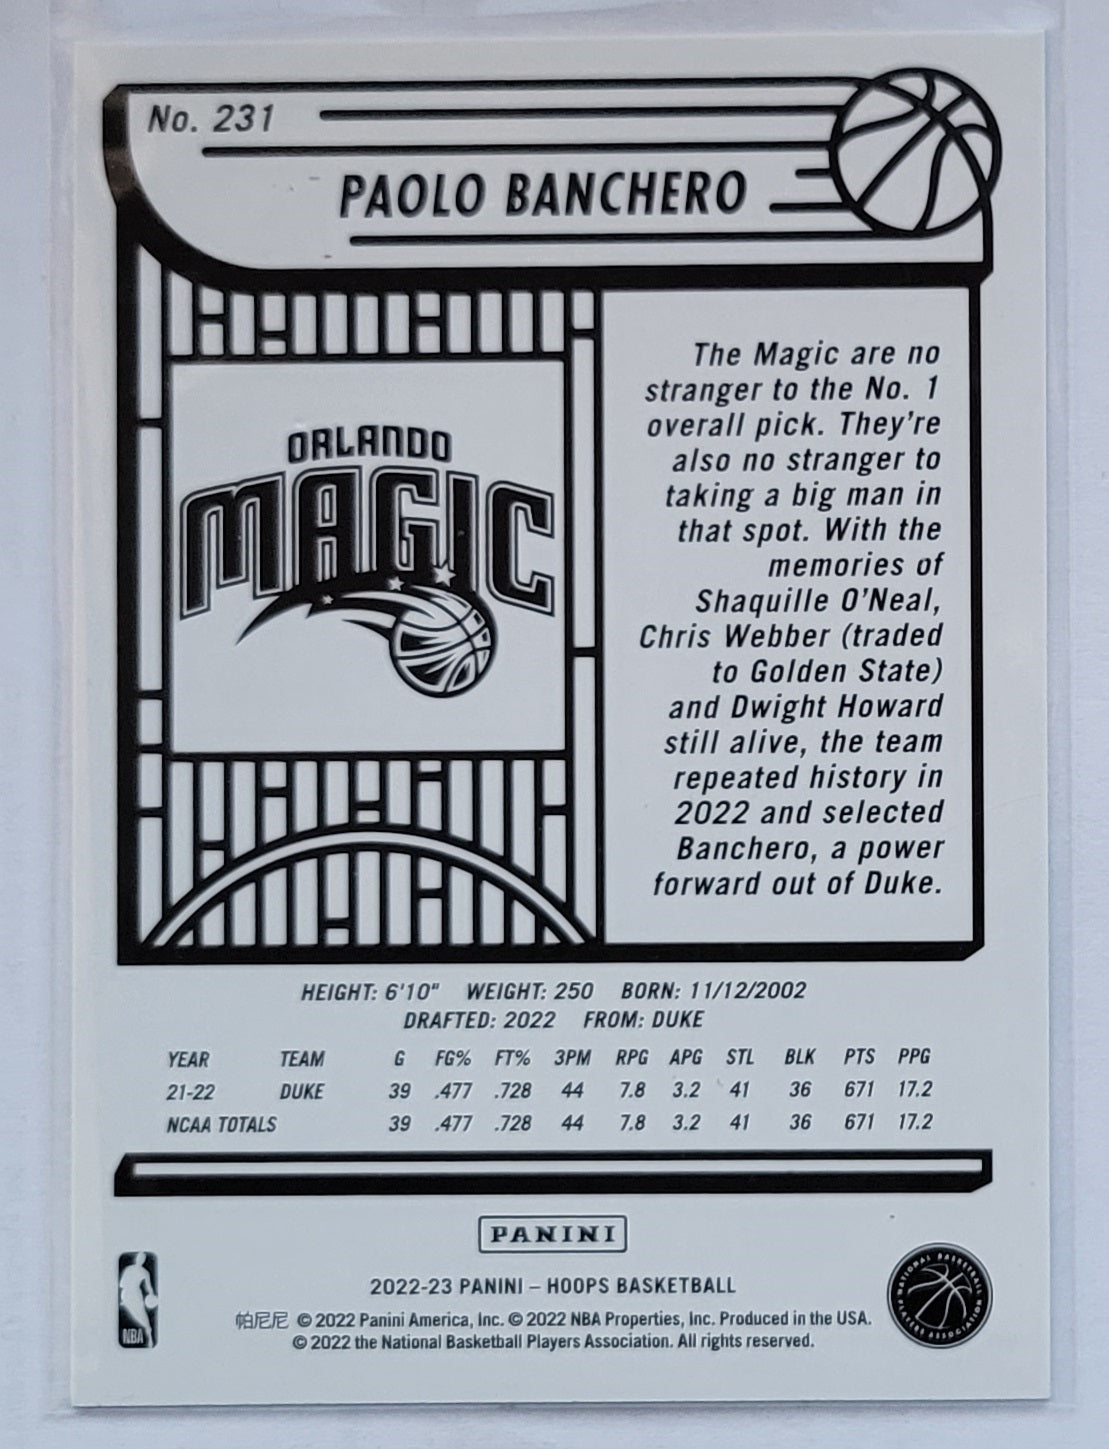 Paolo Banchero - 2022-23 Hoops #231 RC